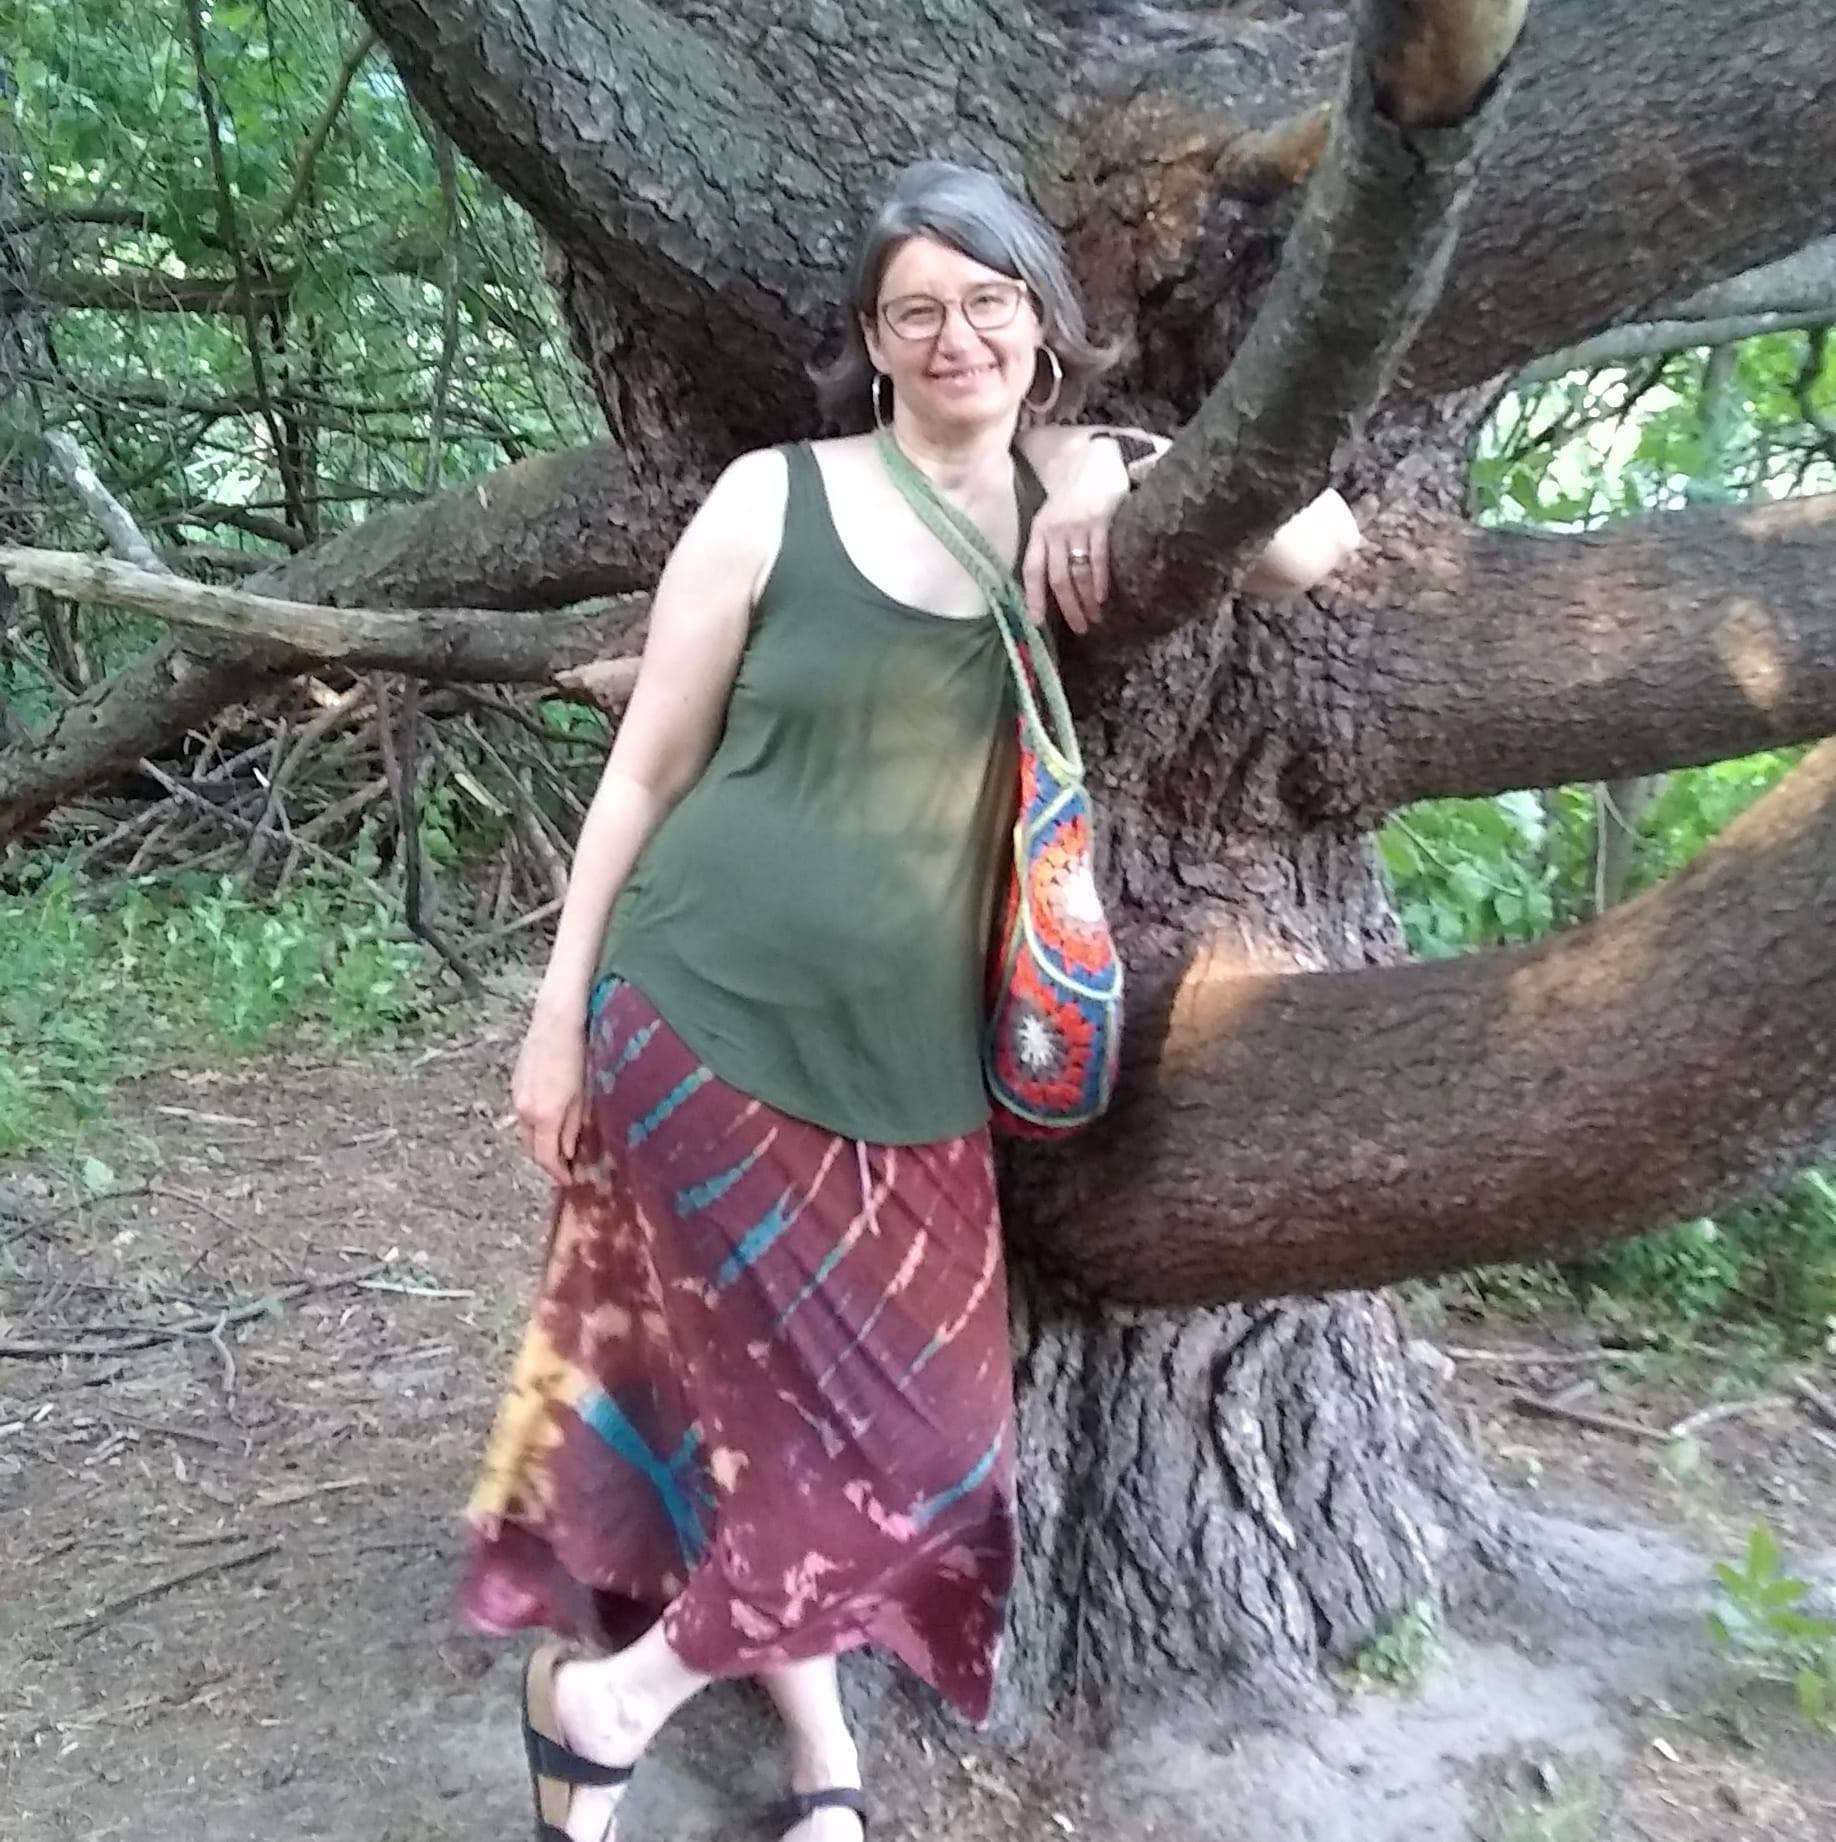 Jennifer Malisauskas with the Tree Spirit